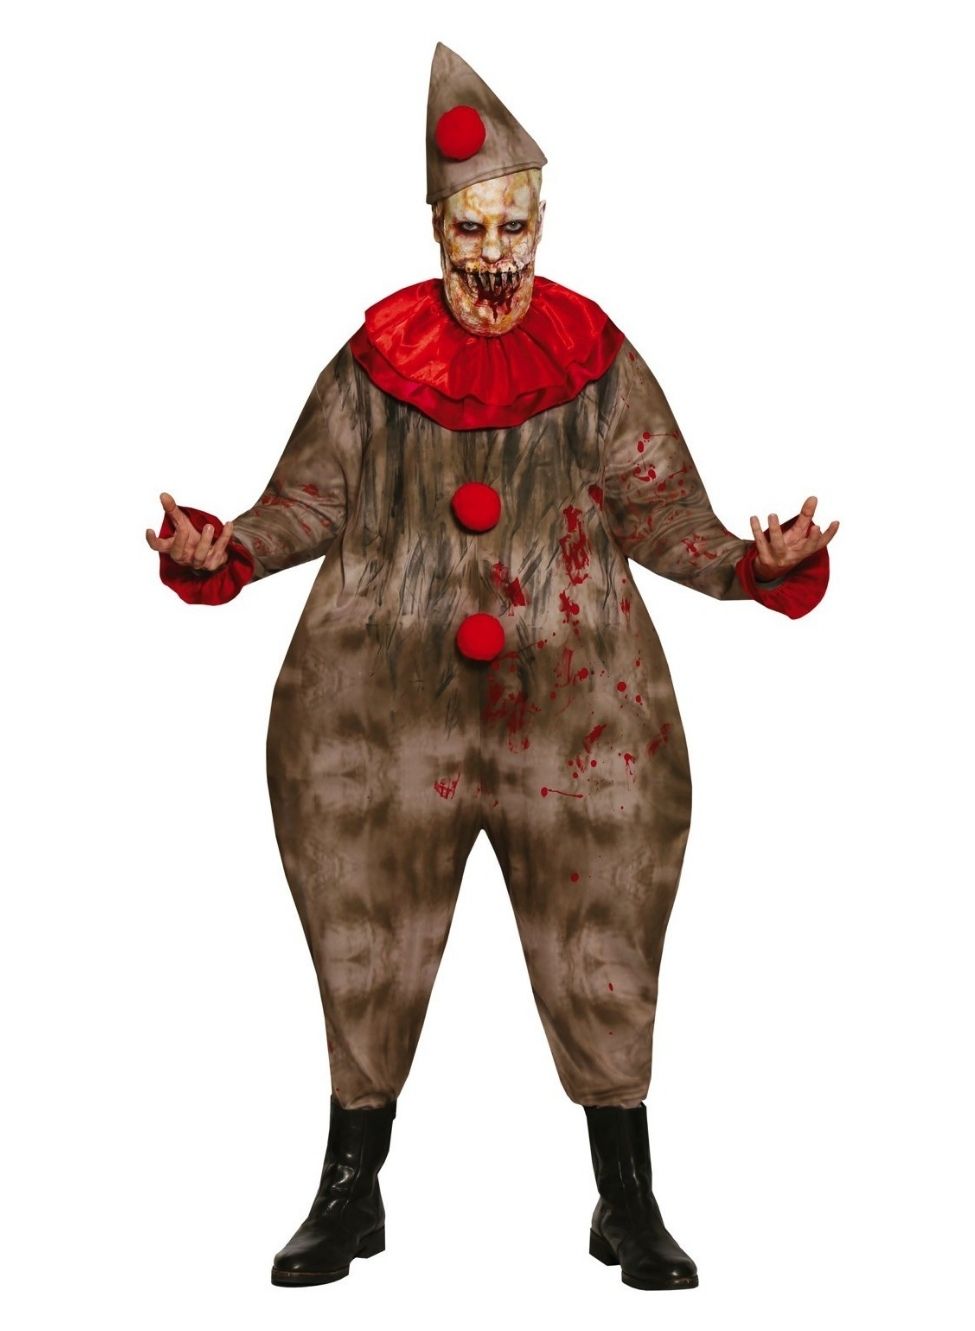 Costume da clown film horror per adulto